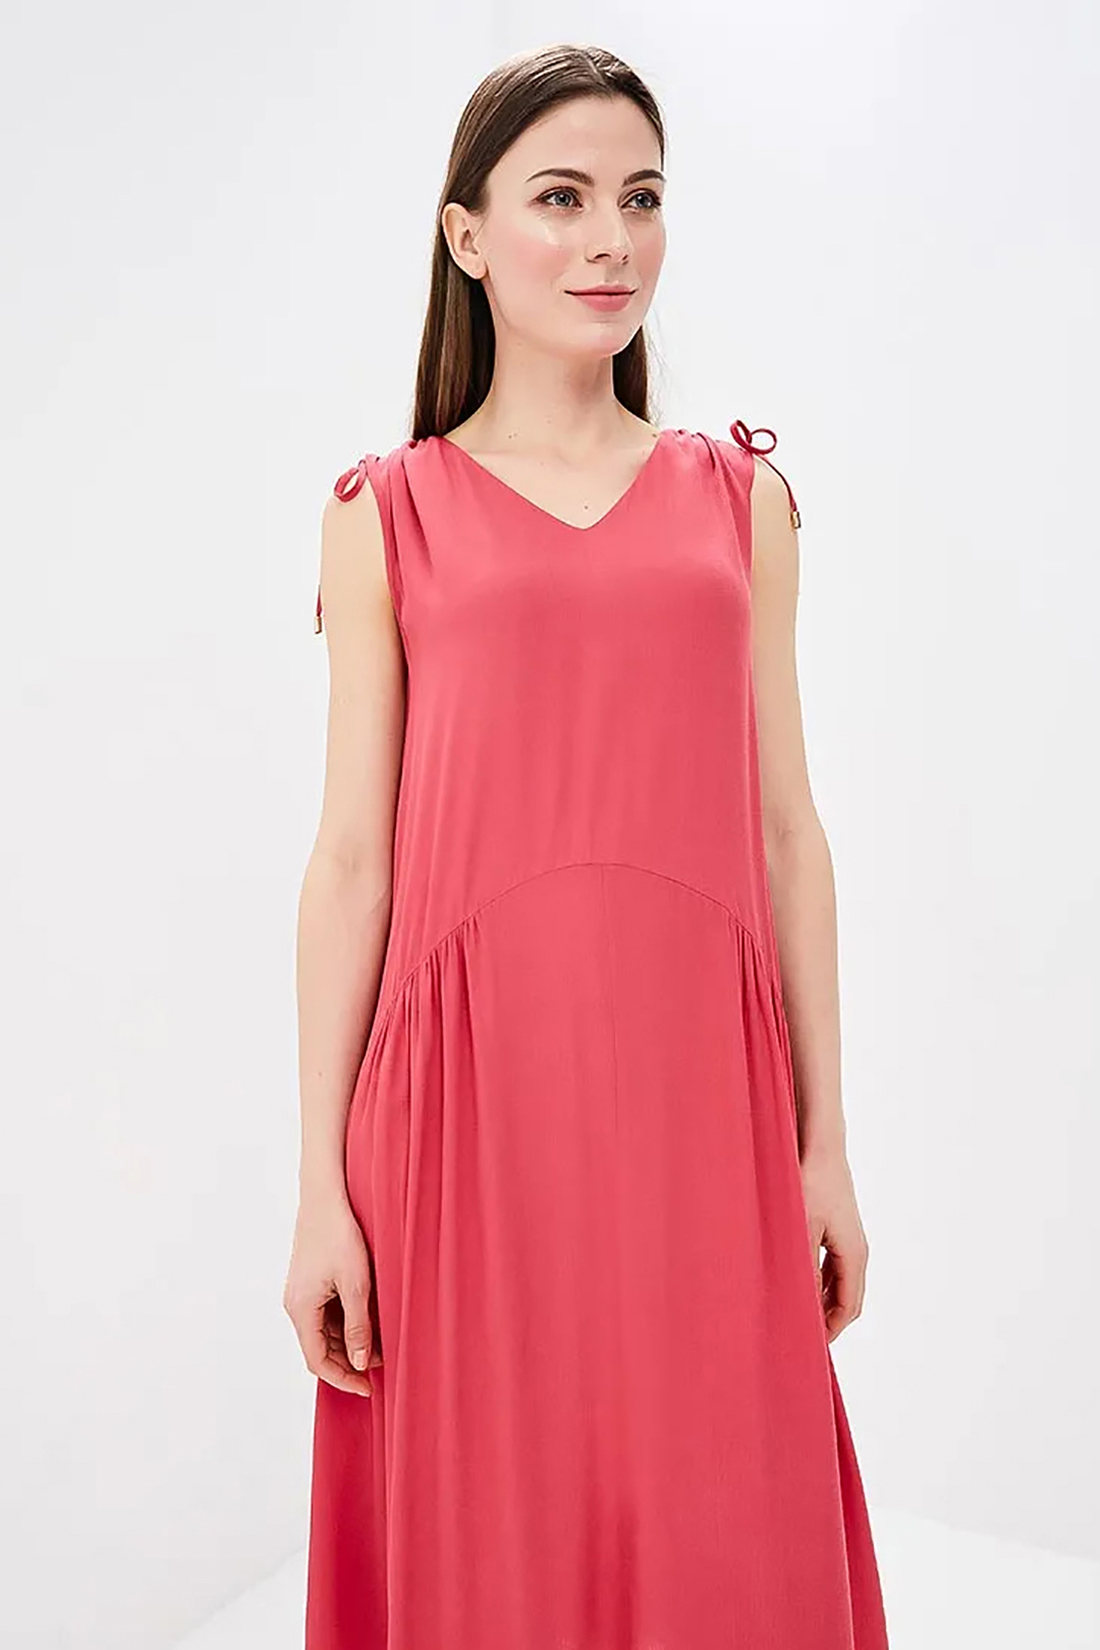 Платье со сборками на плечах (арт. baon B458075), размер XL, цвет розовый Платье со сборками на плечах (арт. baon B458075) - фото 3